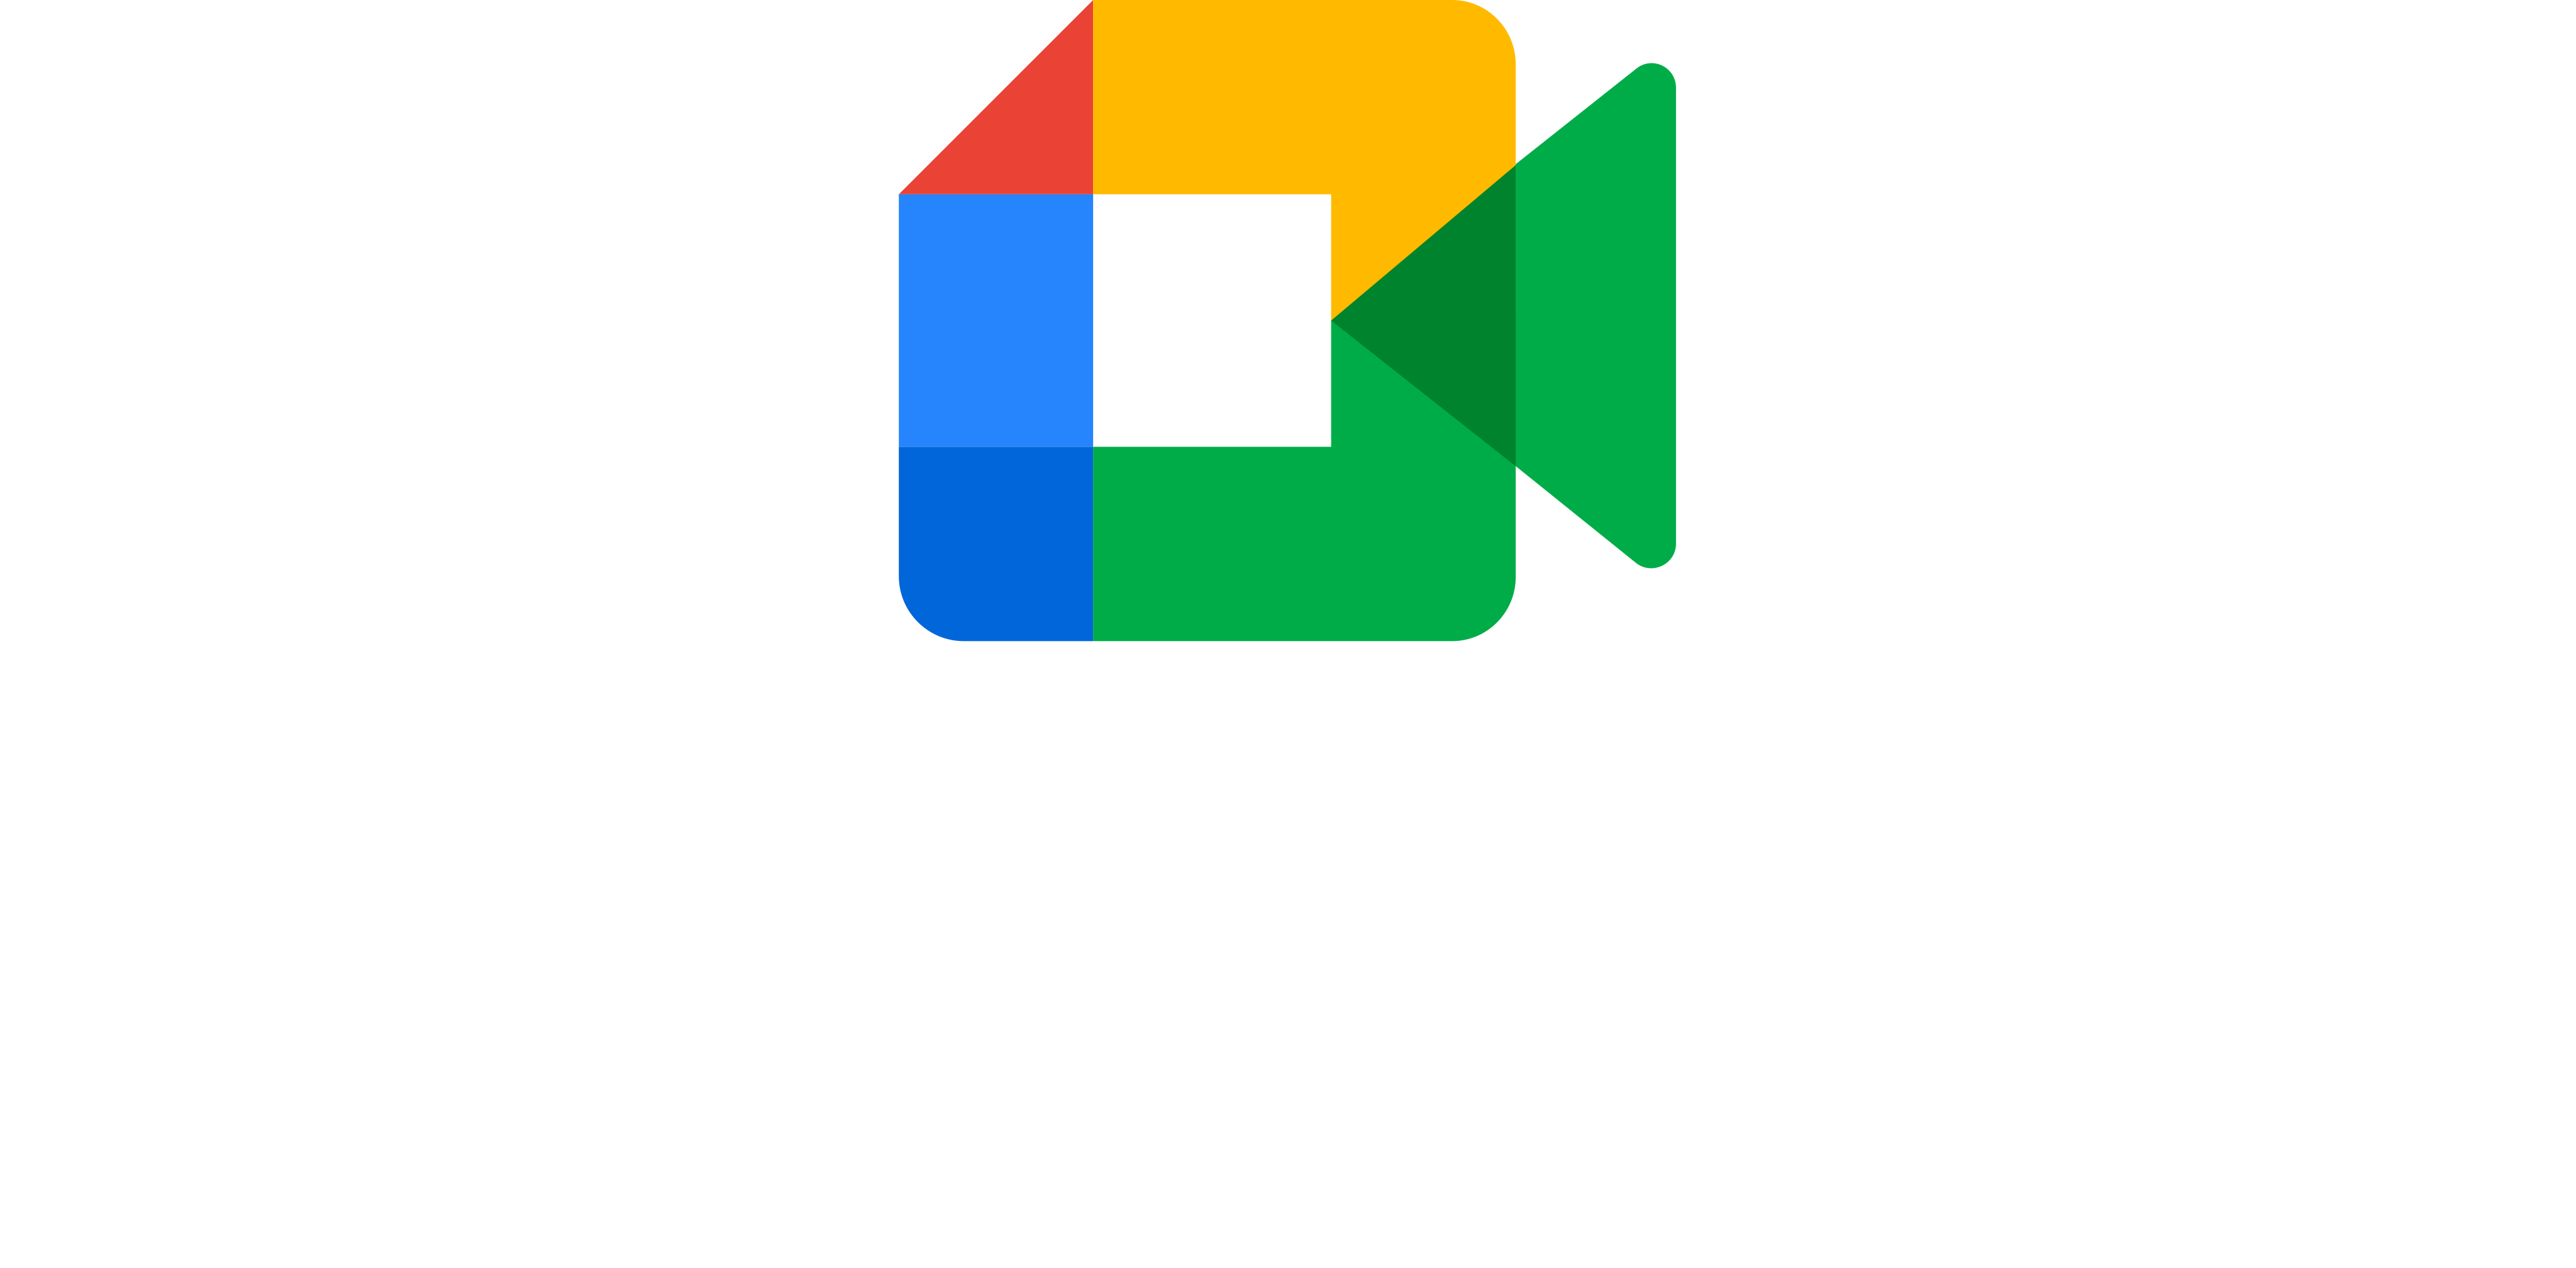 google meet logo 1 copy 1